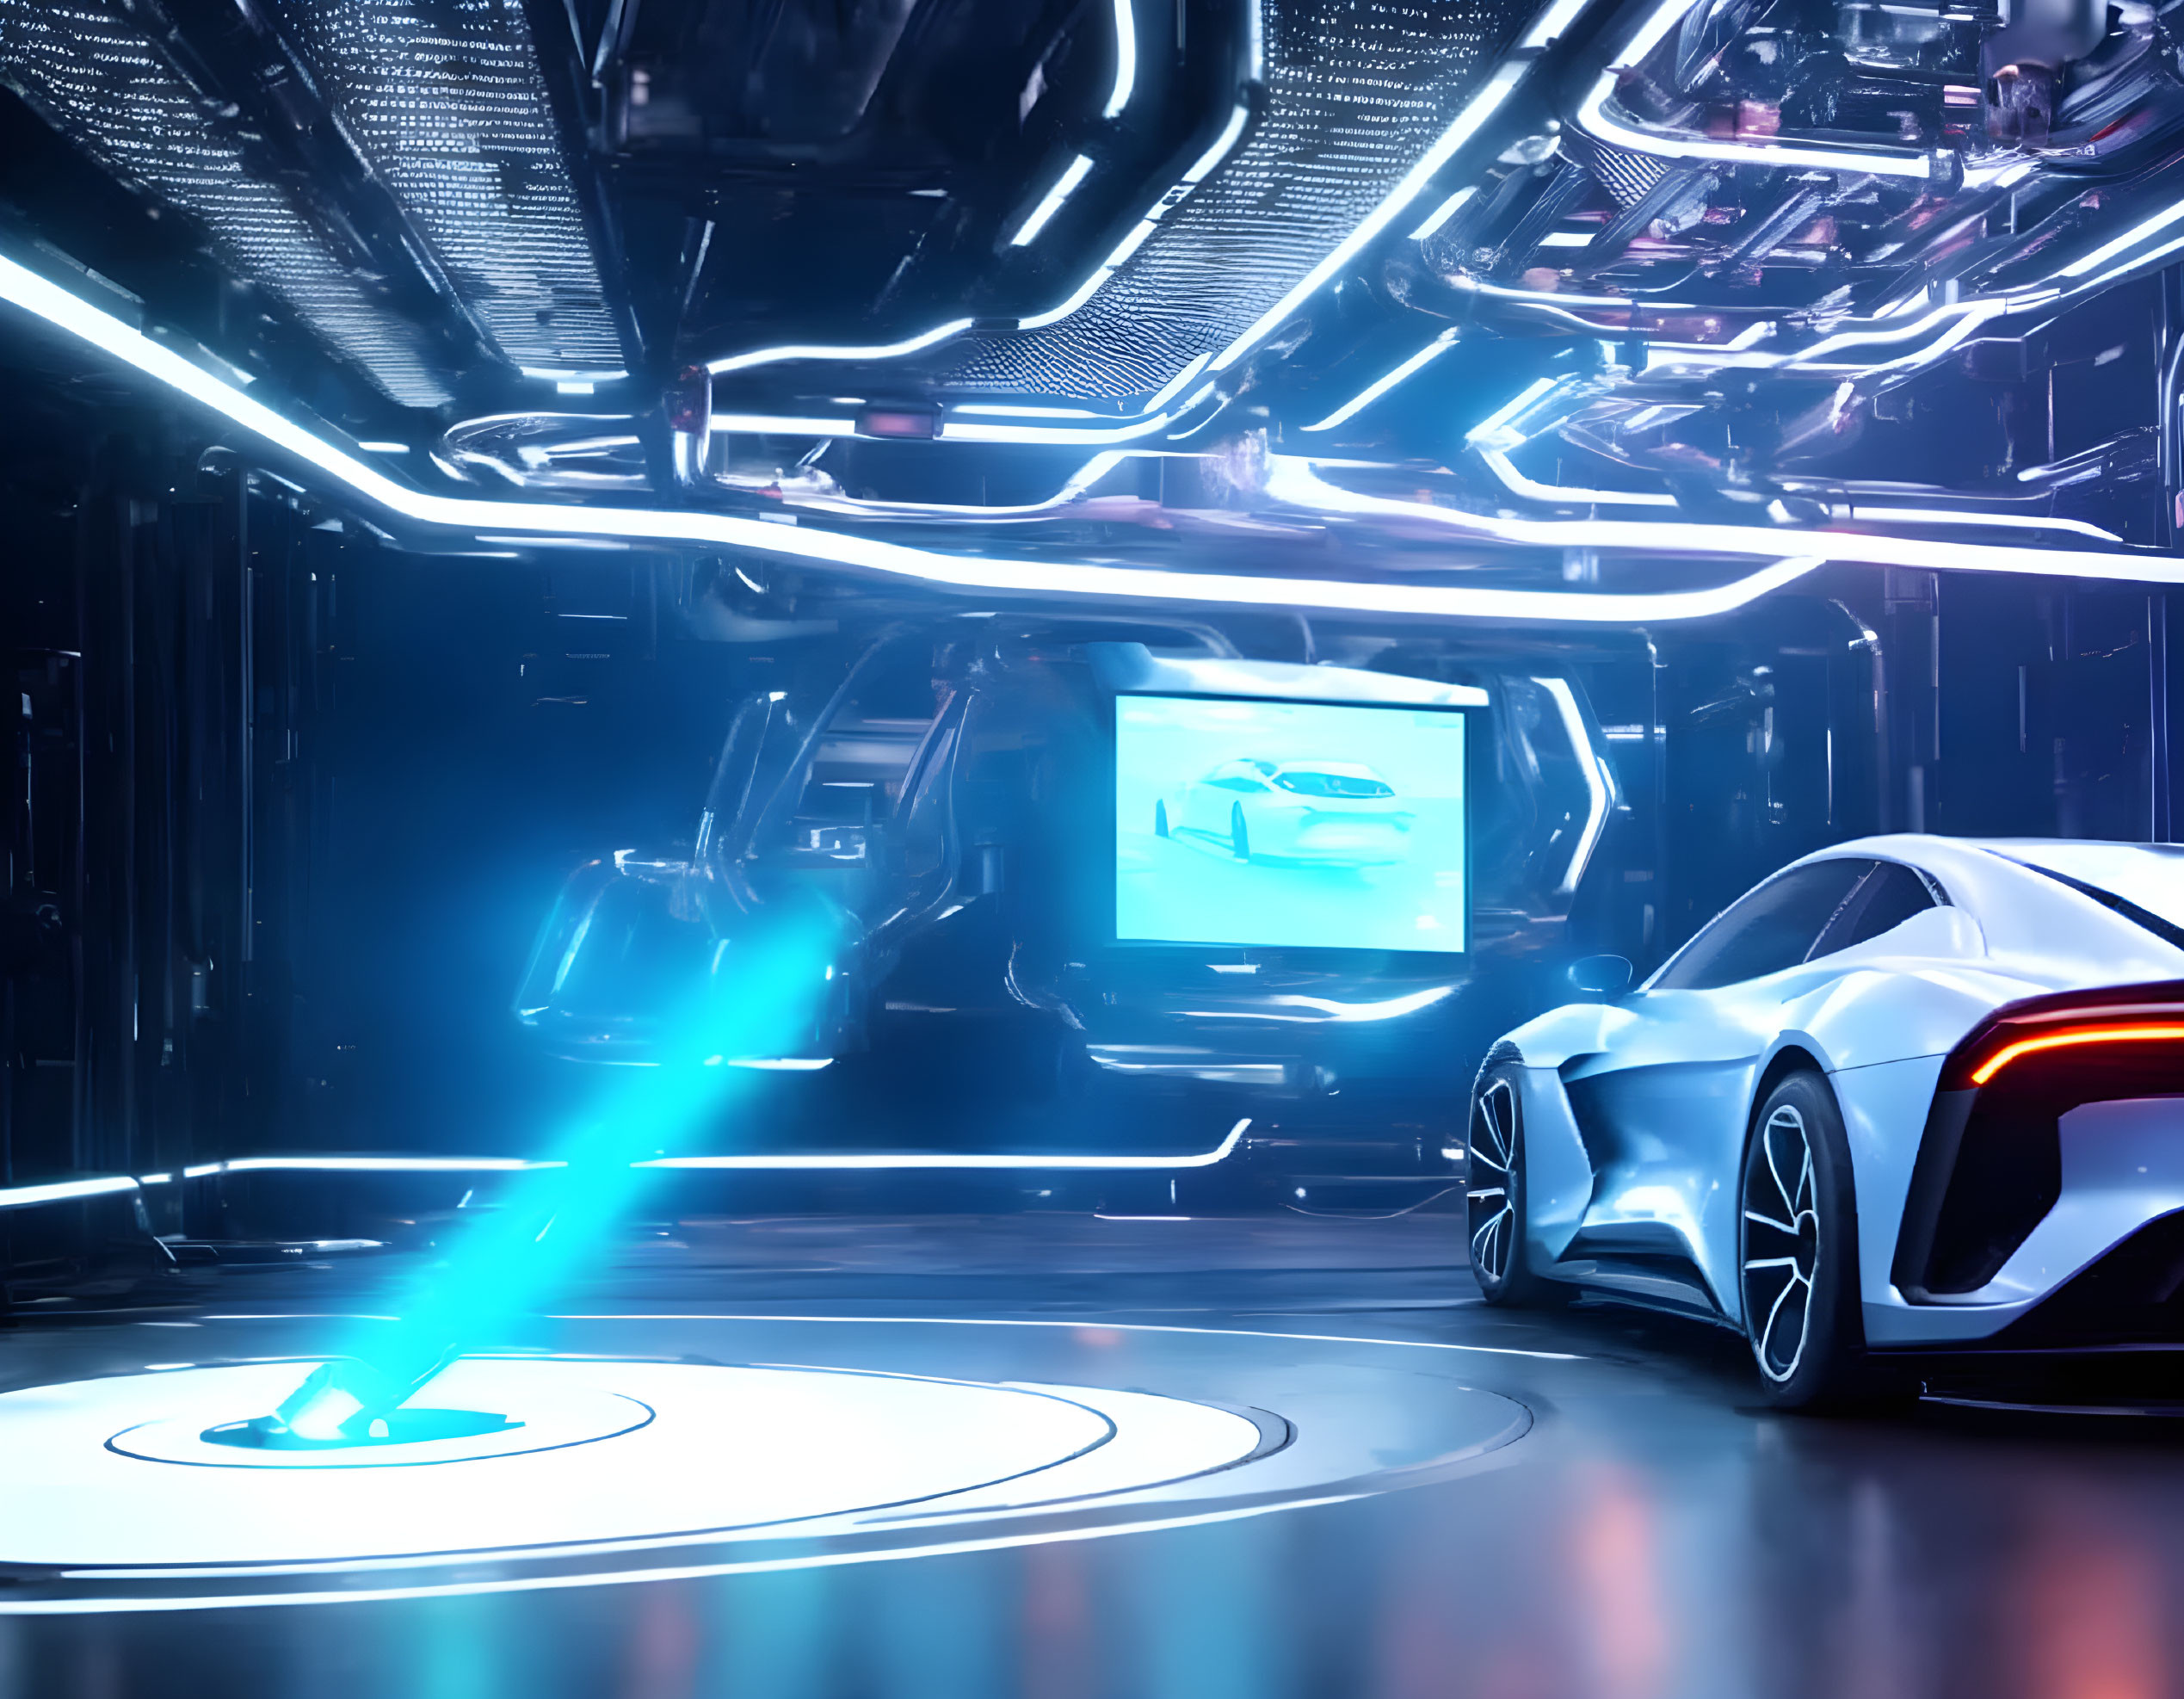 Sleek White Car in Futuristic Garage with Neon Lights